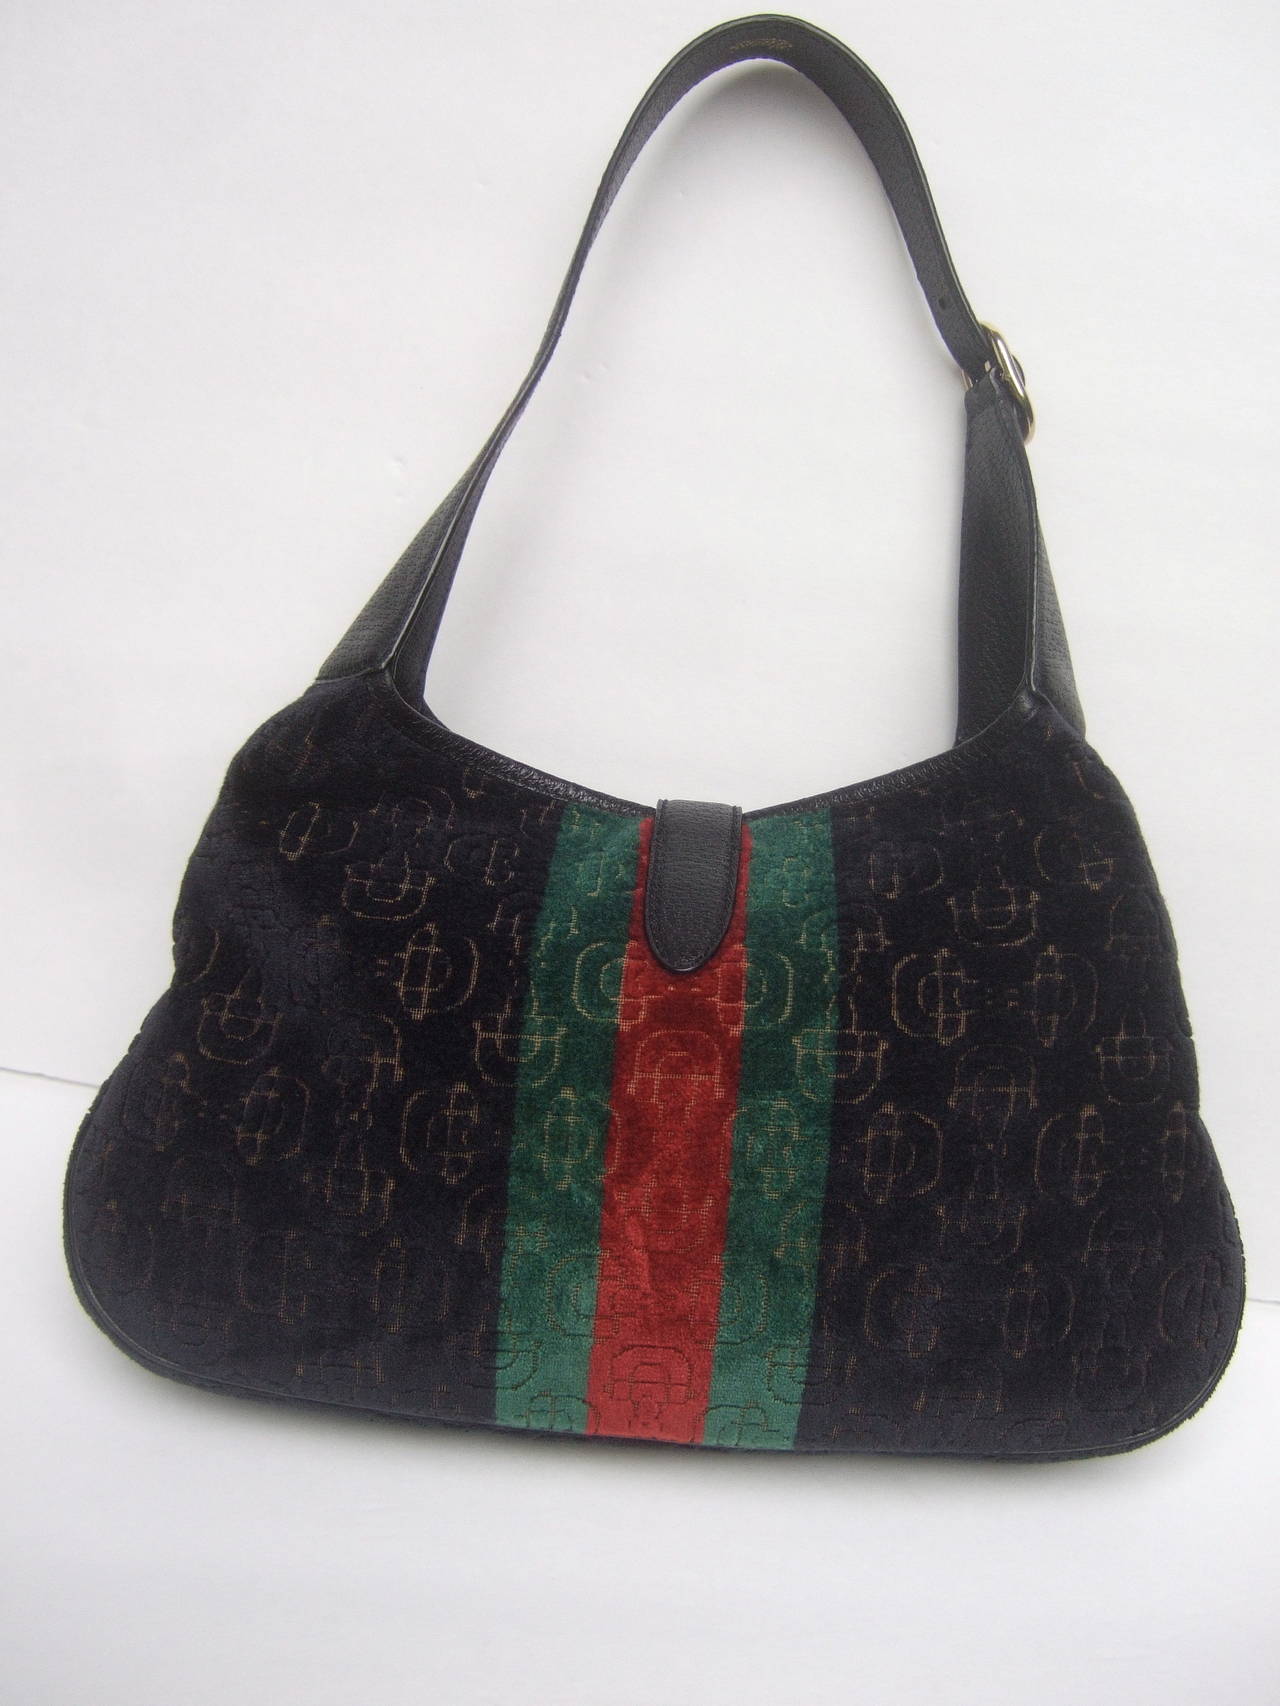 Gucci Italy Iconic Devore Jackie O Piston Handbag 2